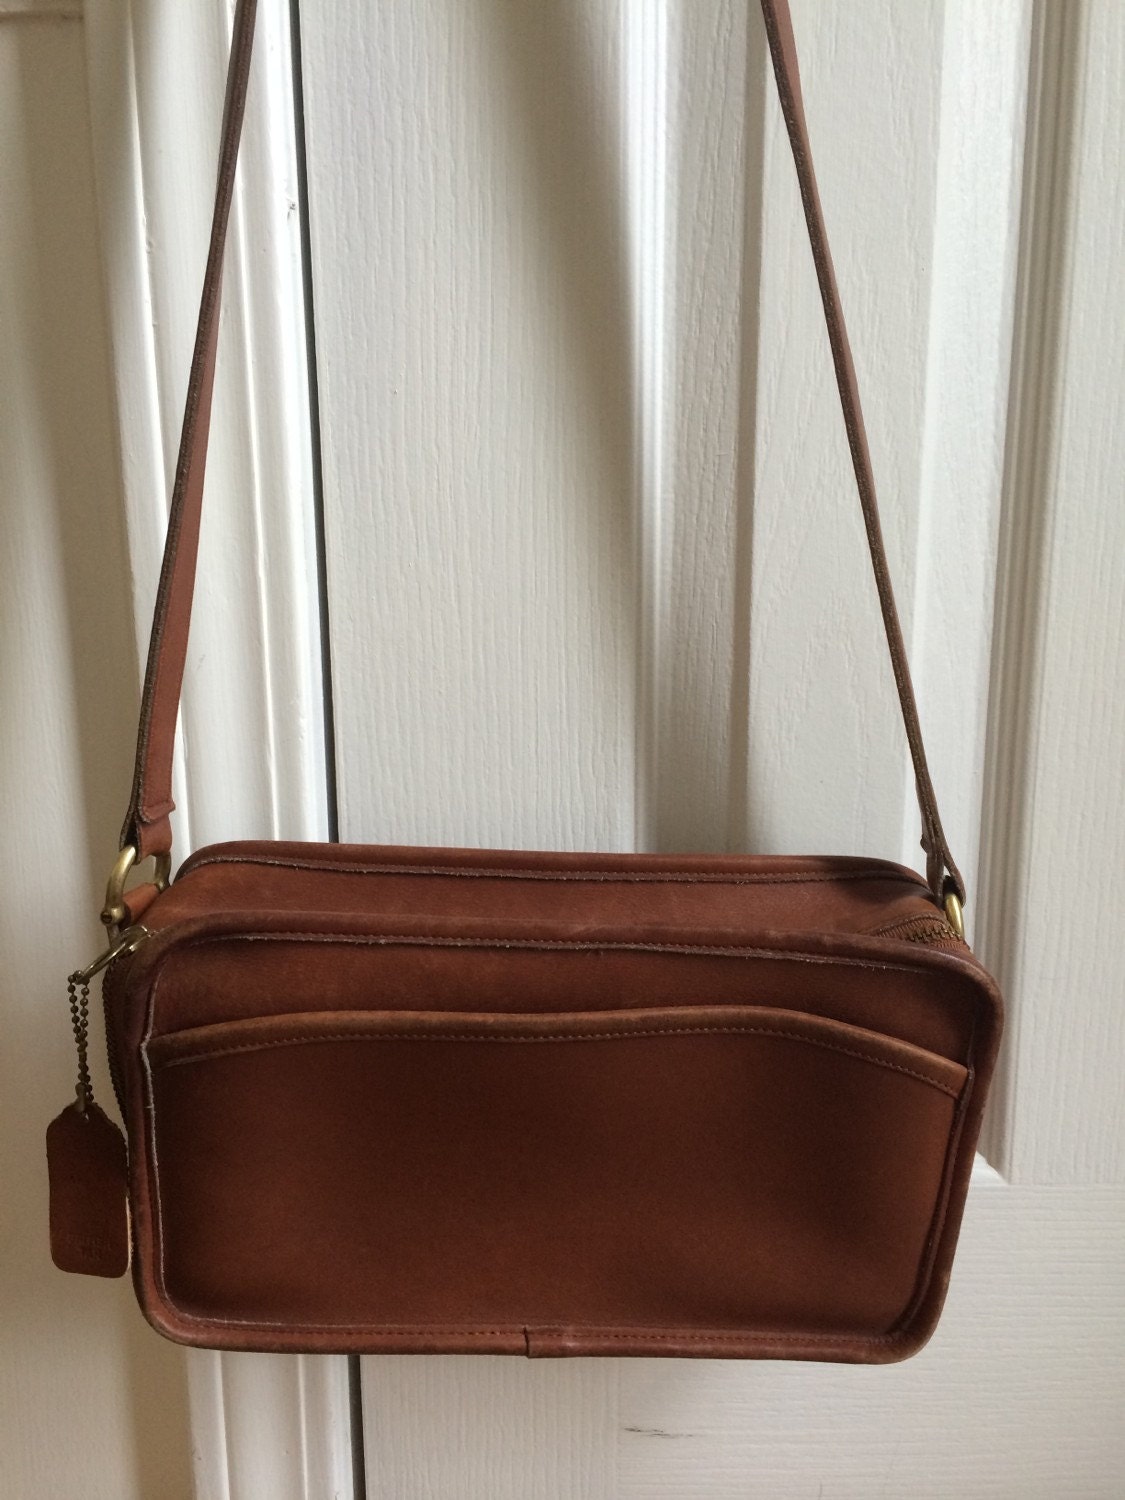 Vintage Coach Brown Leather Crossbody Bag